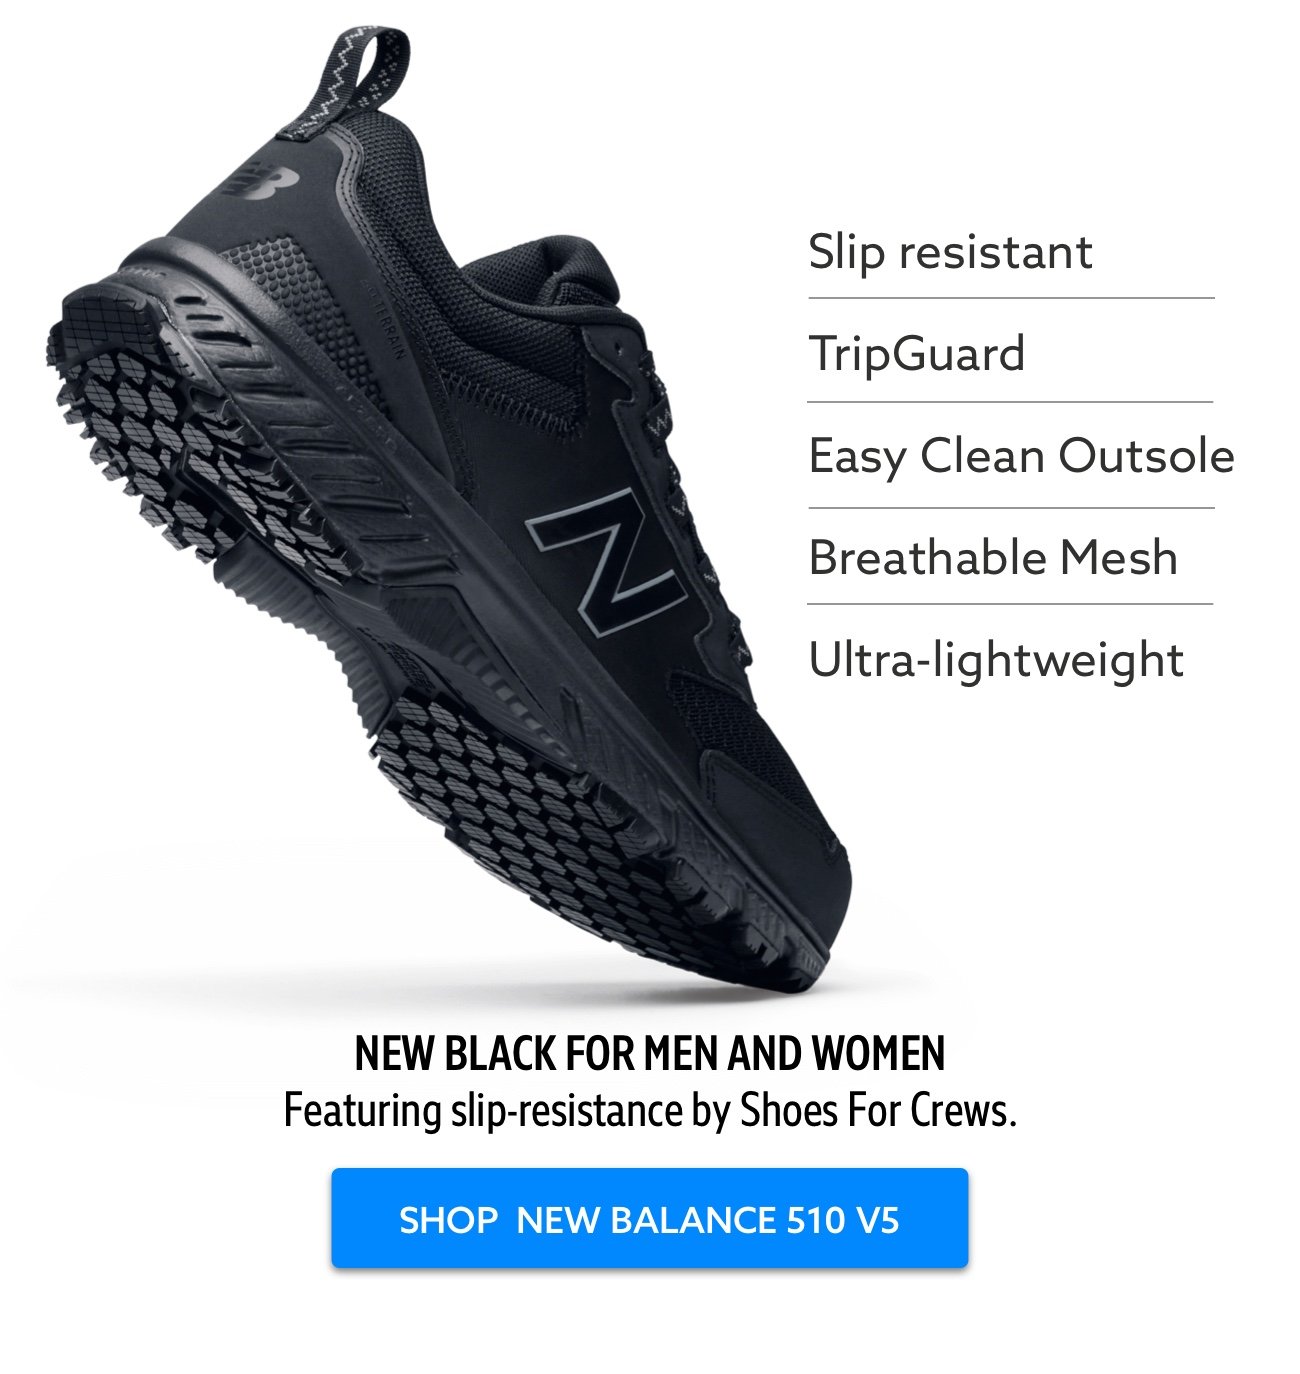 Shop New Balance 510 v5 black for men and women.